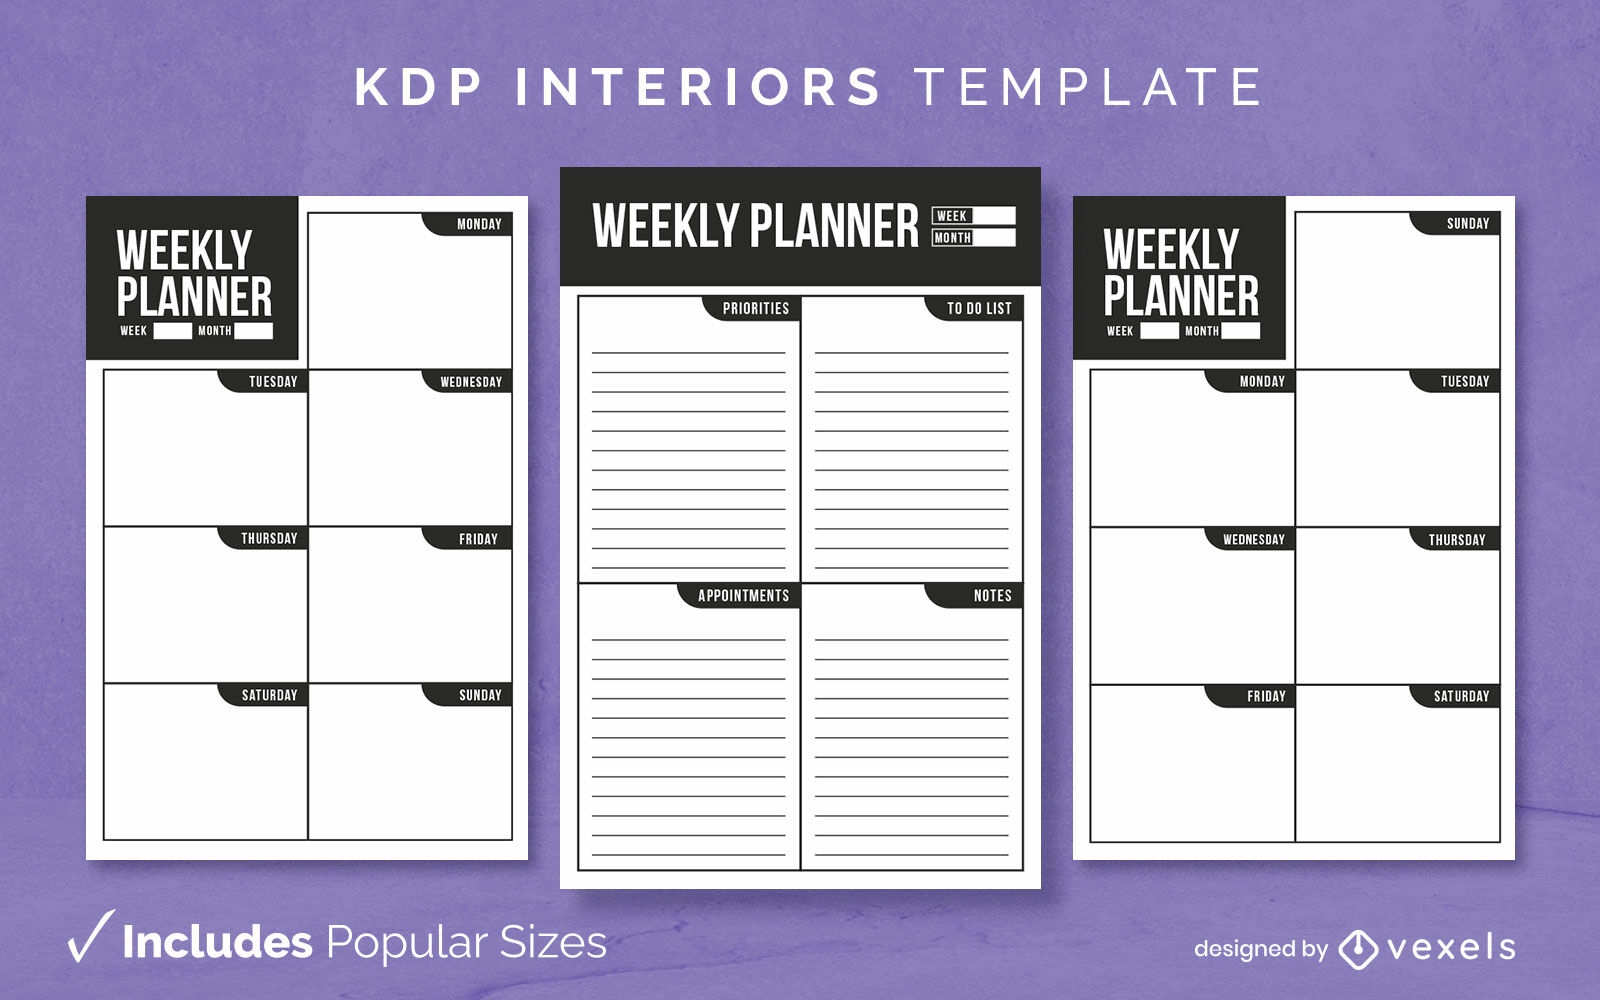 Organized weekly planner KDP interior template design